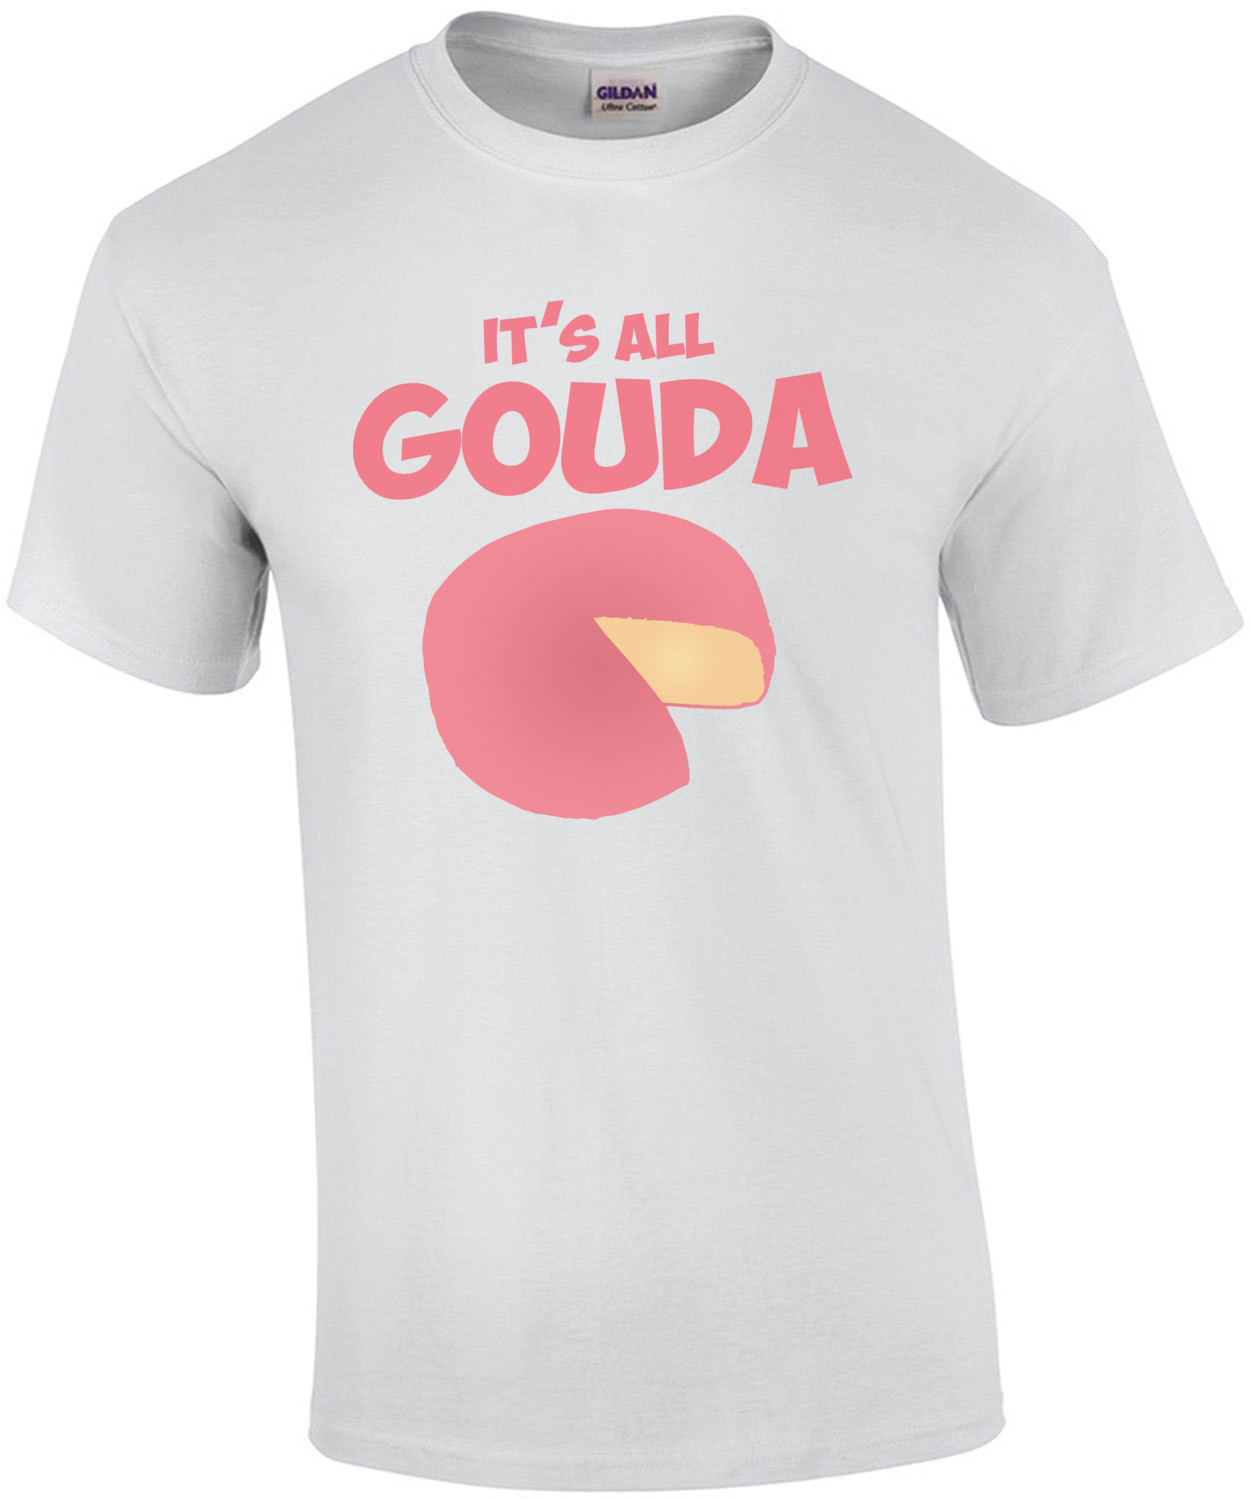 it's all gouda t-shirt